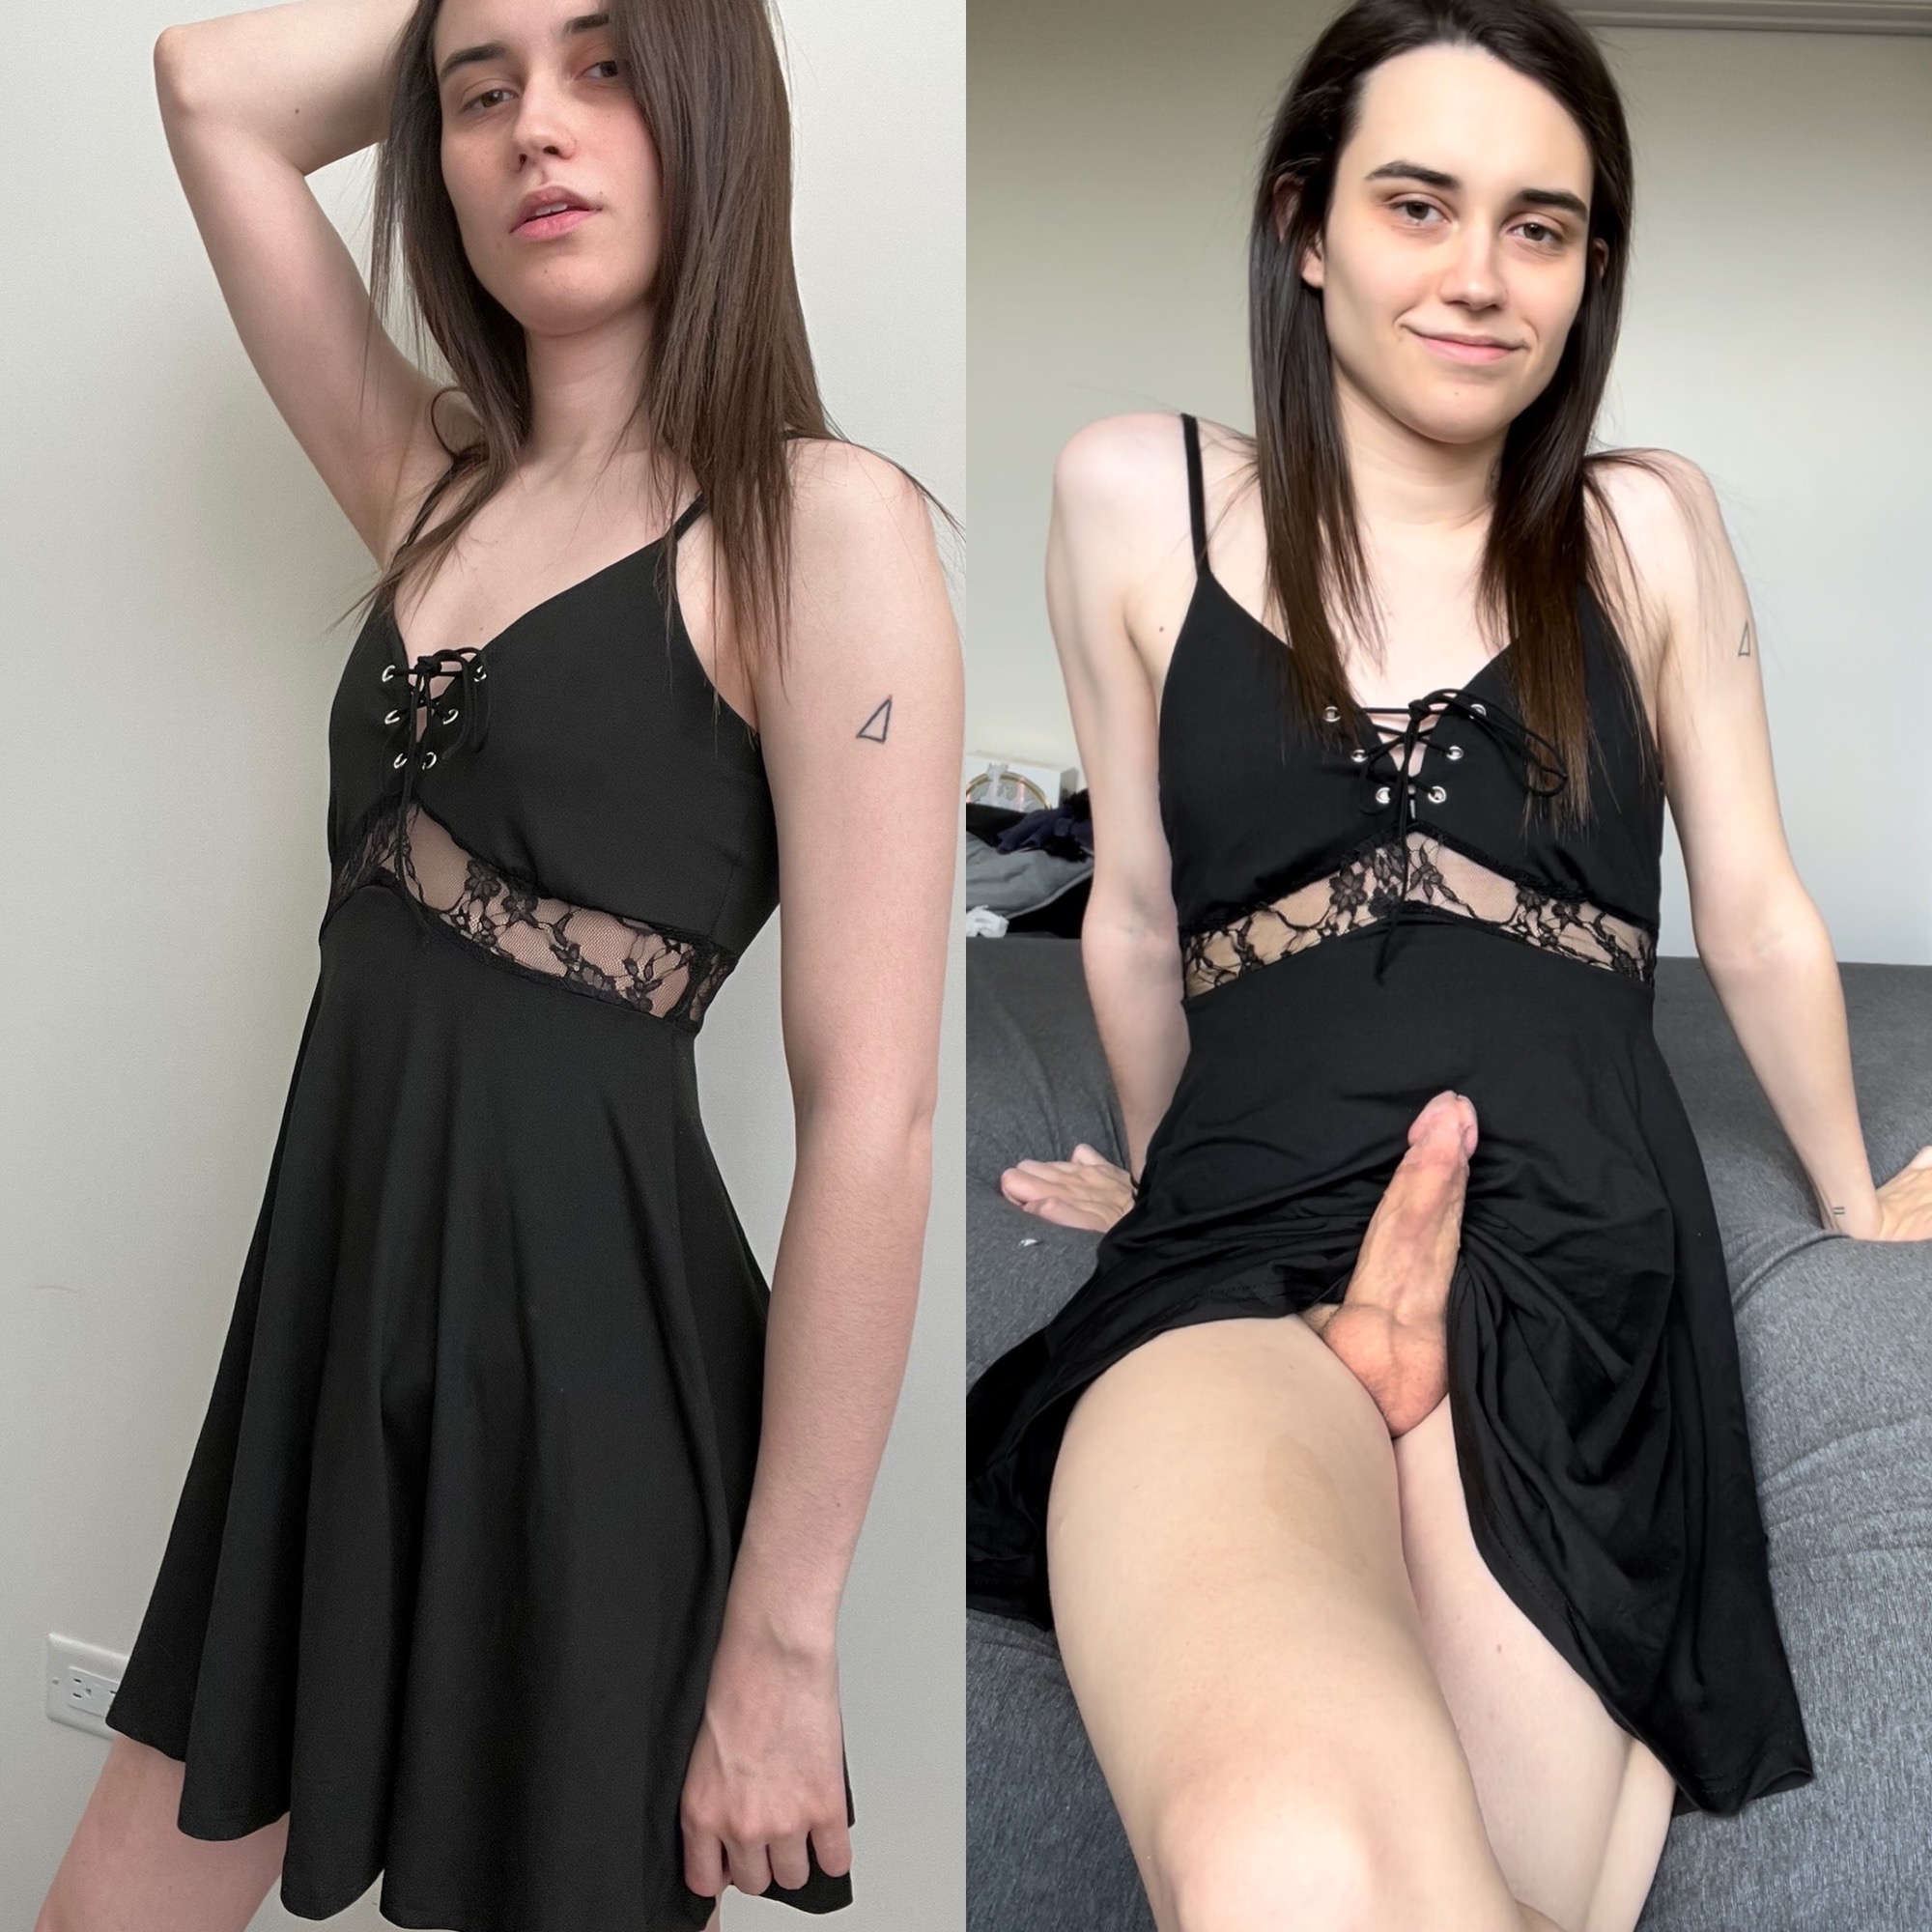 Nackte teen transgender